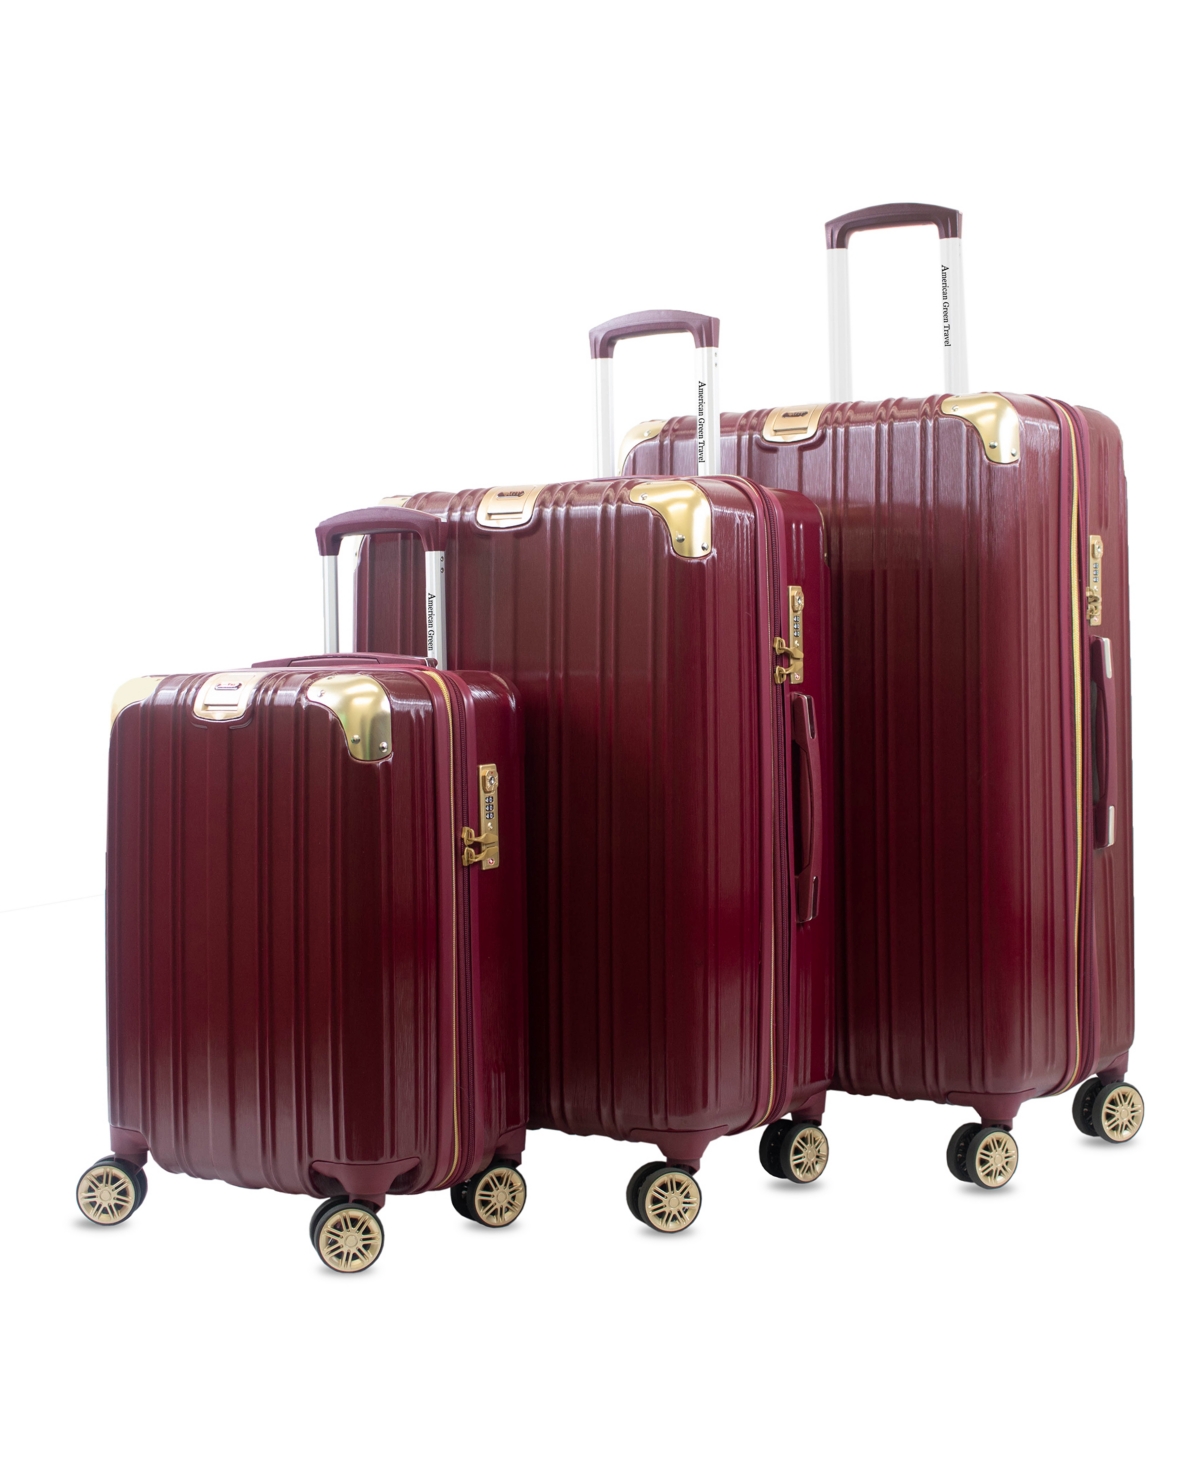 Melrose S Anti-Theft Hardside Spinner Luggage, Set of 3 - Navy